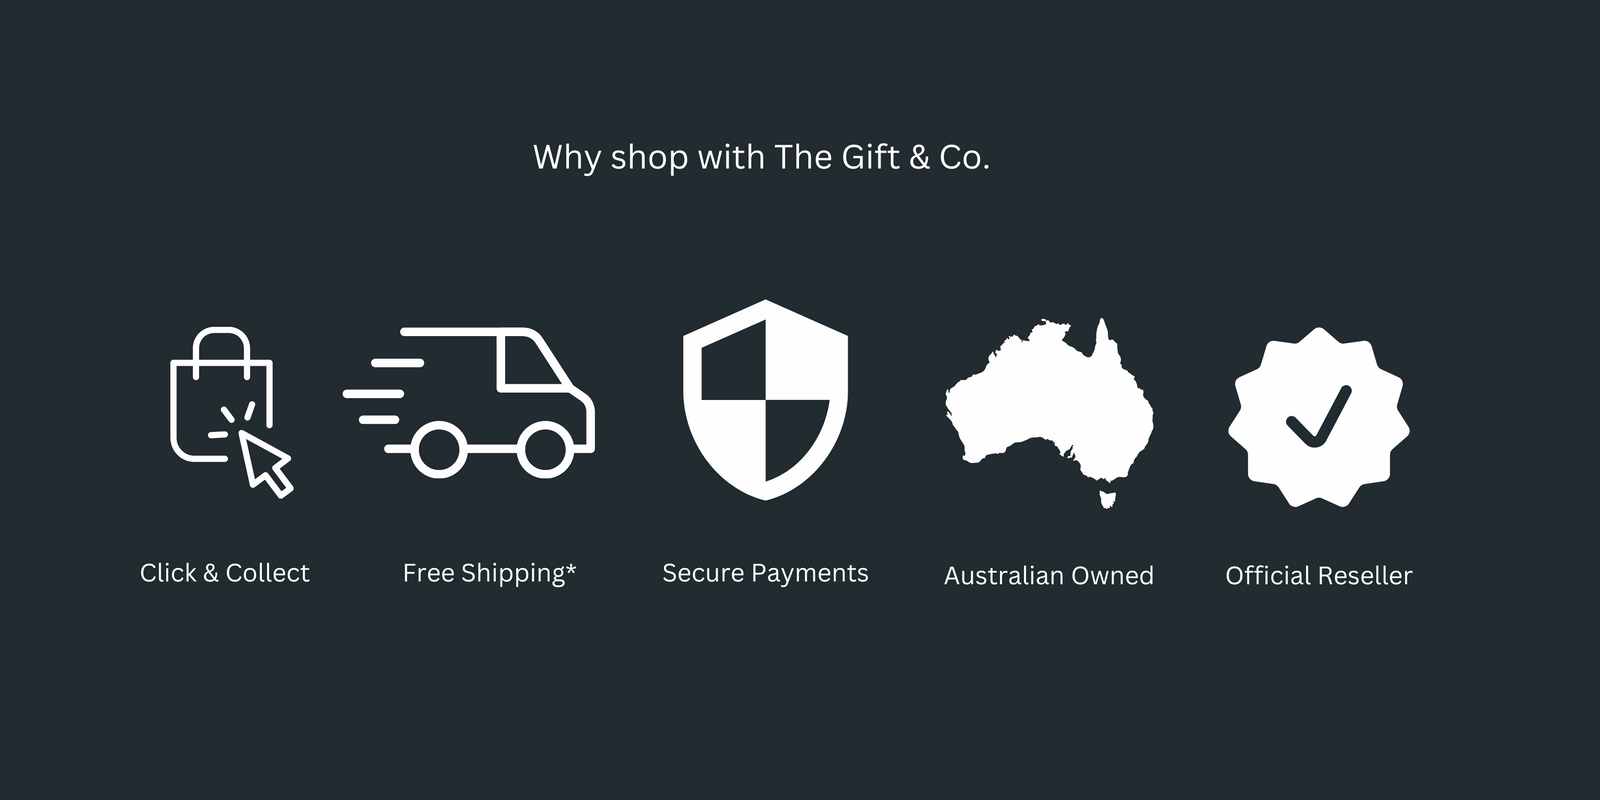 Why The Gift & Co Sydney Australia